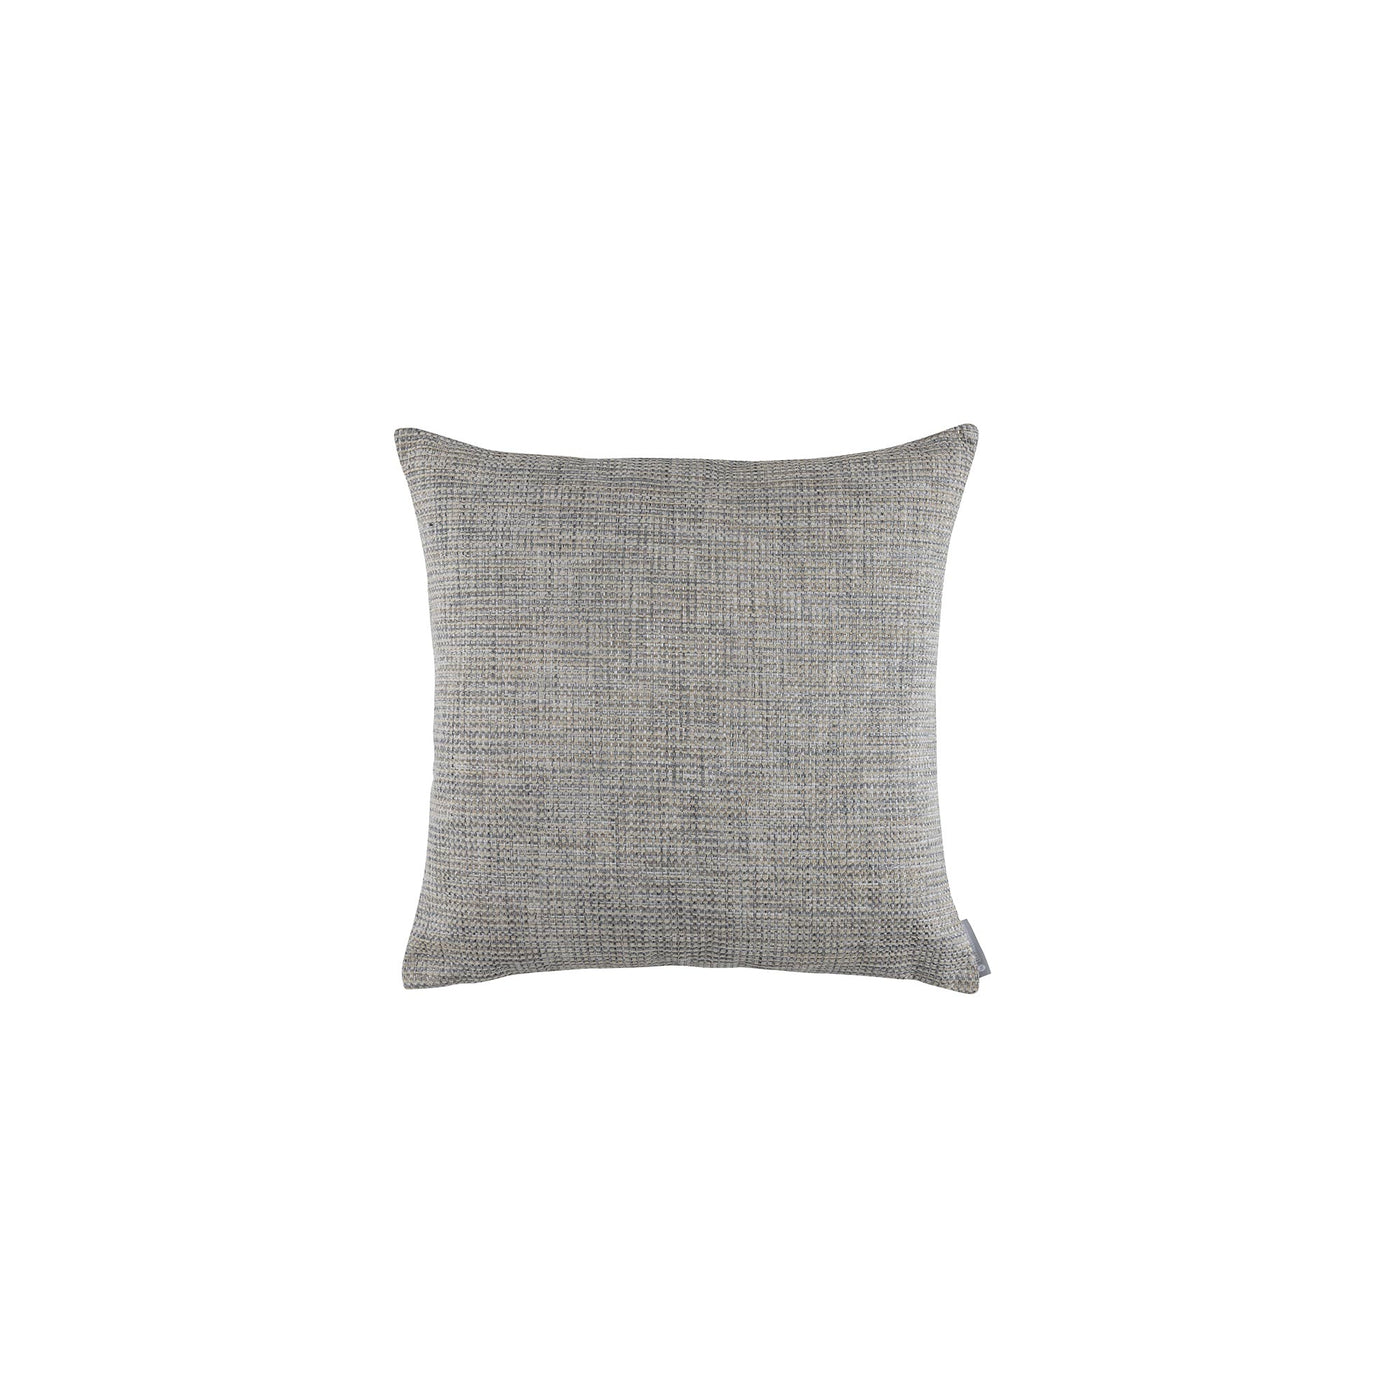 Tweed Travertine Small Square Pillow (22x22)